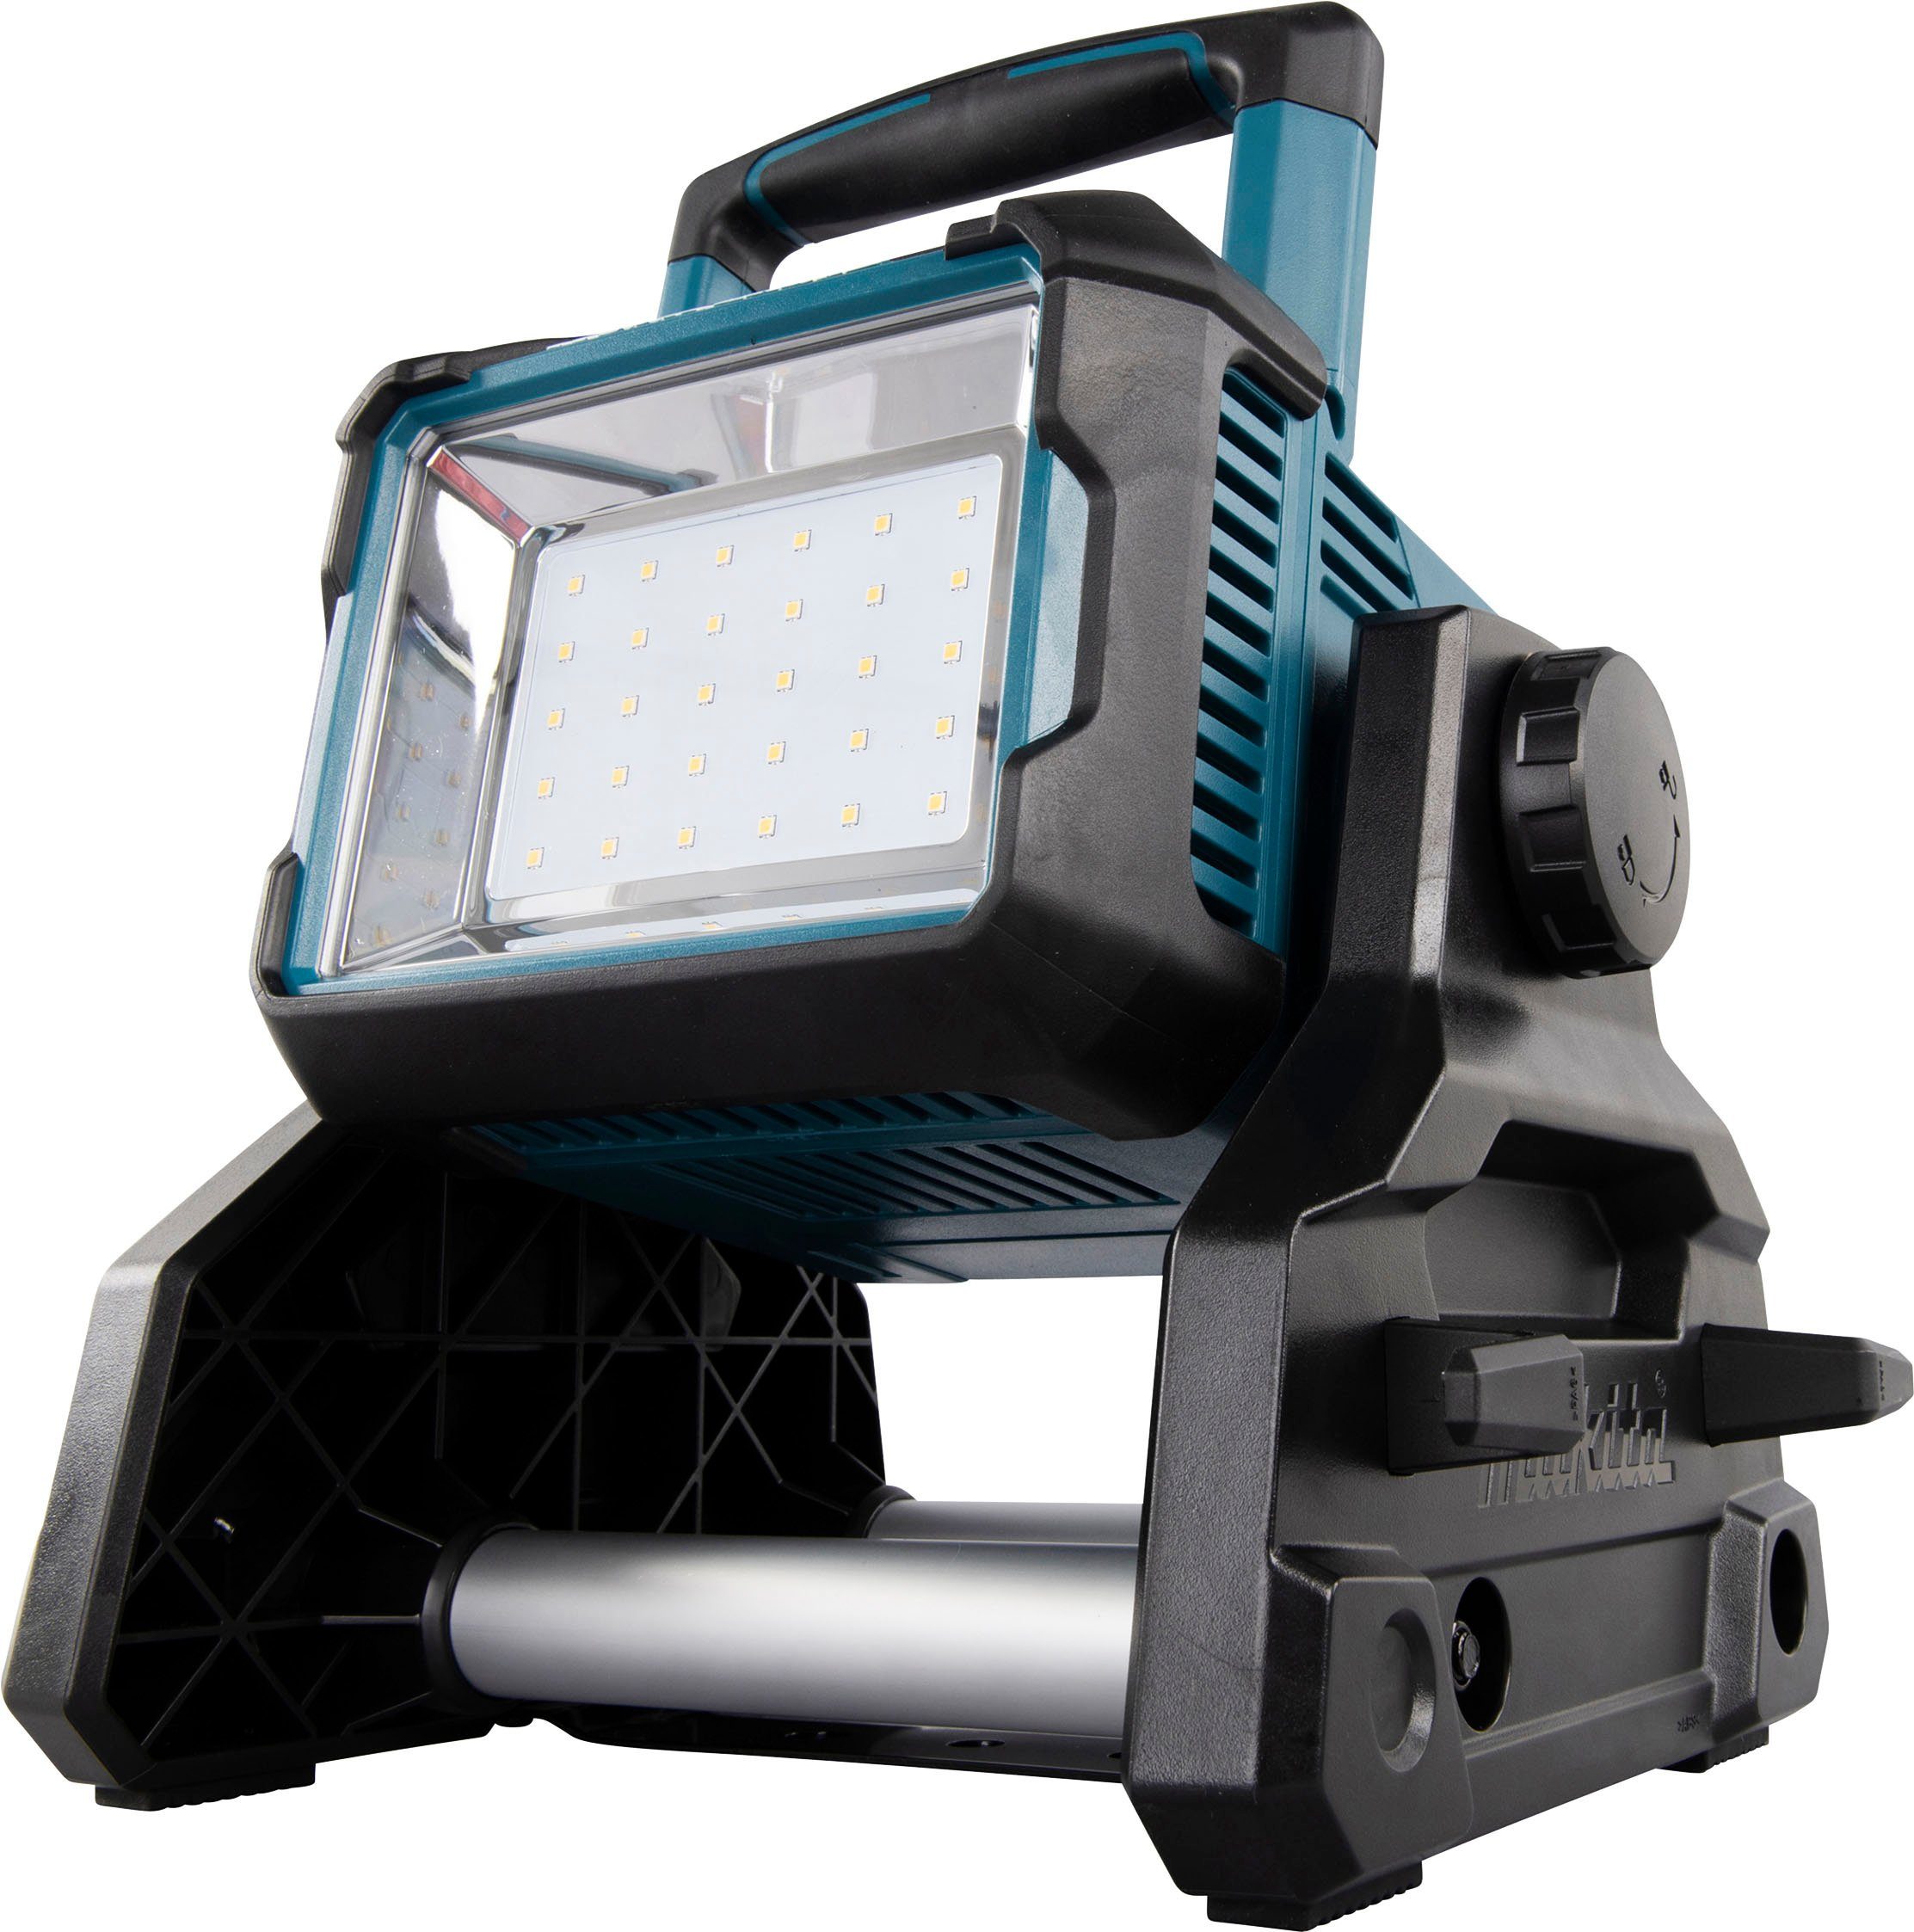 Makita LED fest DEADML811, Tageslichtweiß, 1800 750/1500/3000 lm Arbeitsleuchte lx, LED integriert